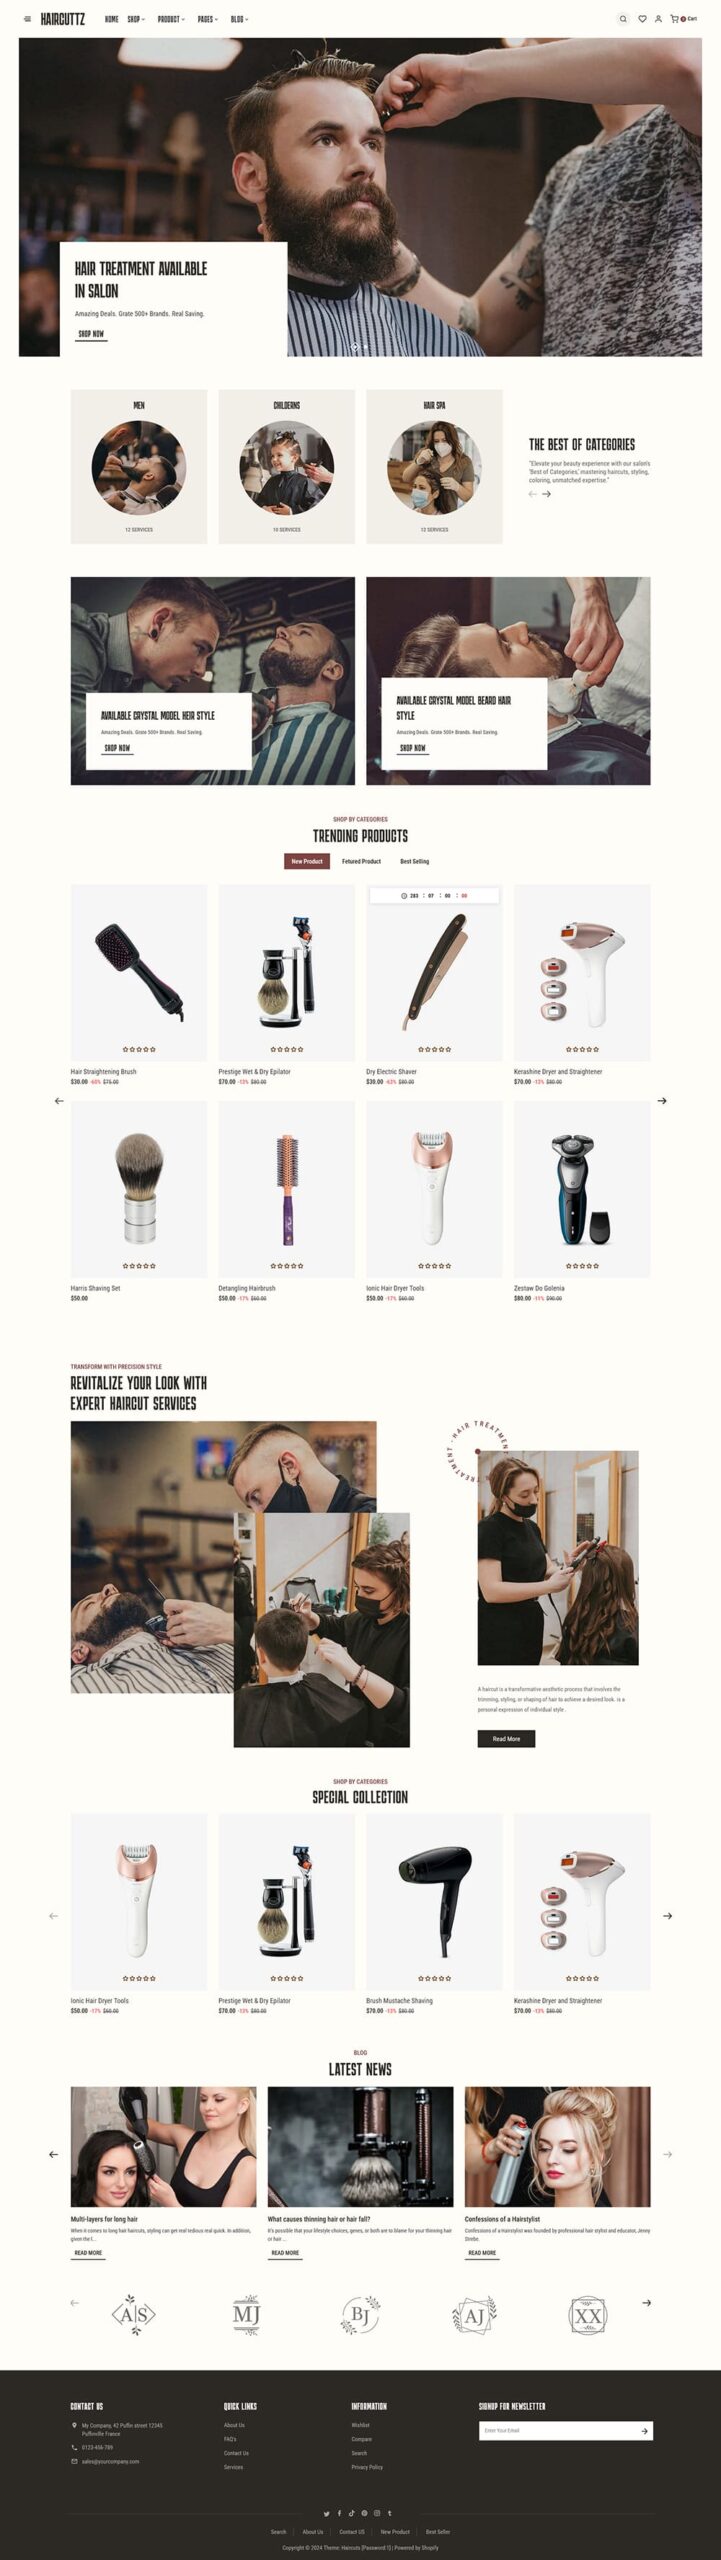 HairCuttz - Barber Shop & Hair Beauty Saloon - Shopify Theme